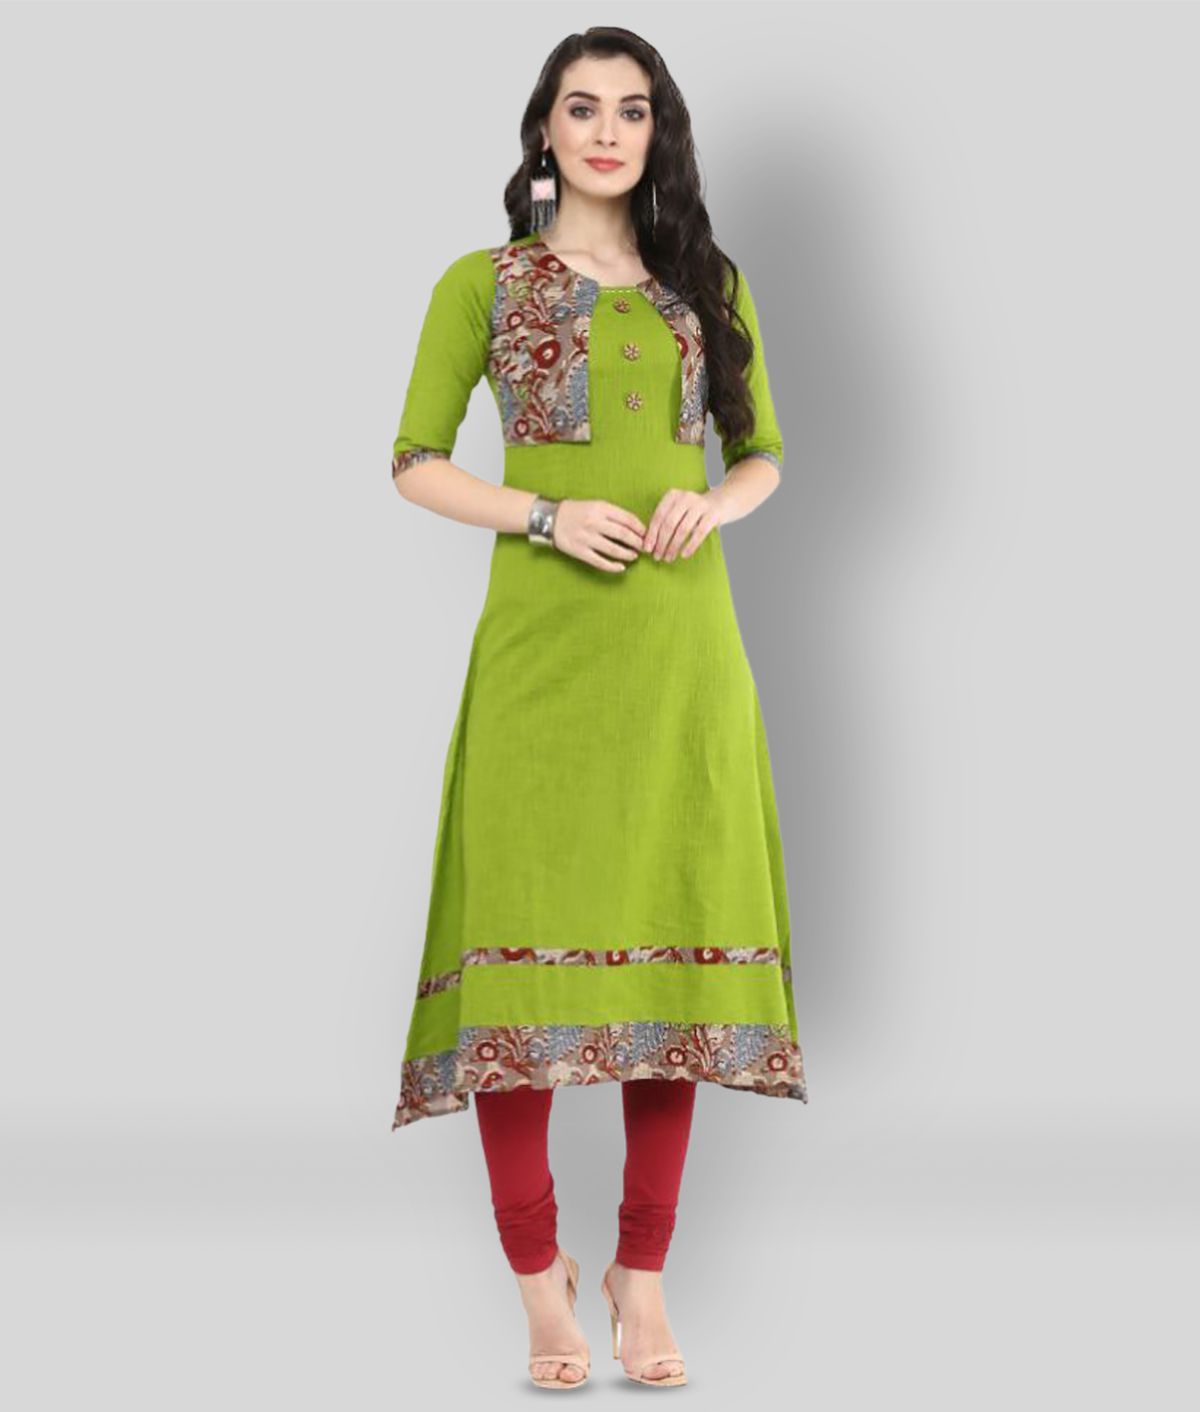     			Yash Gallery - Green Cotton Women's Jacket Style Kurti ( Pack of 1 )